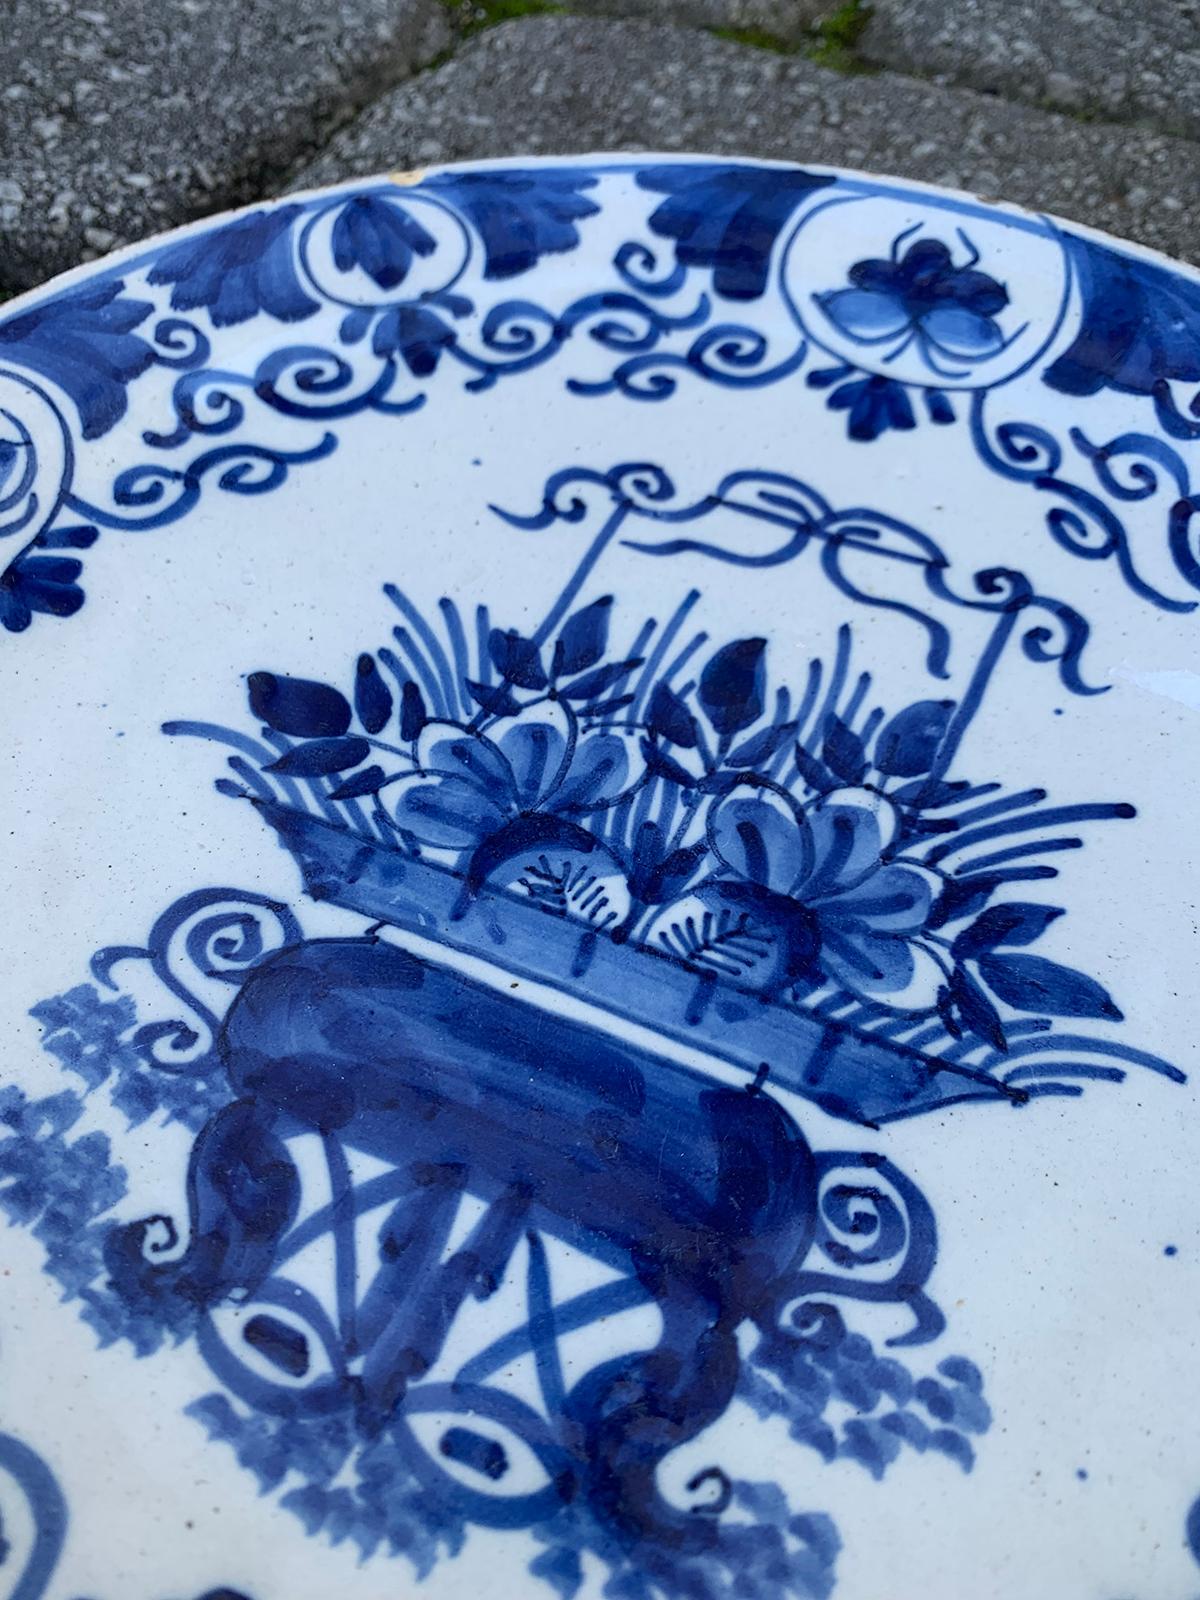 Pair of 18th Century Blue and White Porcelain Plates (18. Jahrhundert und früher)